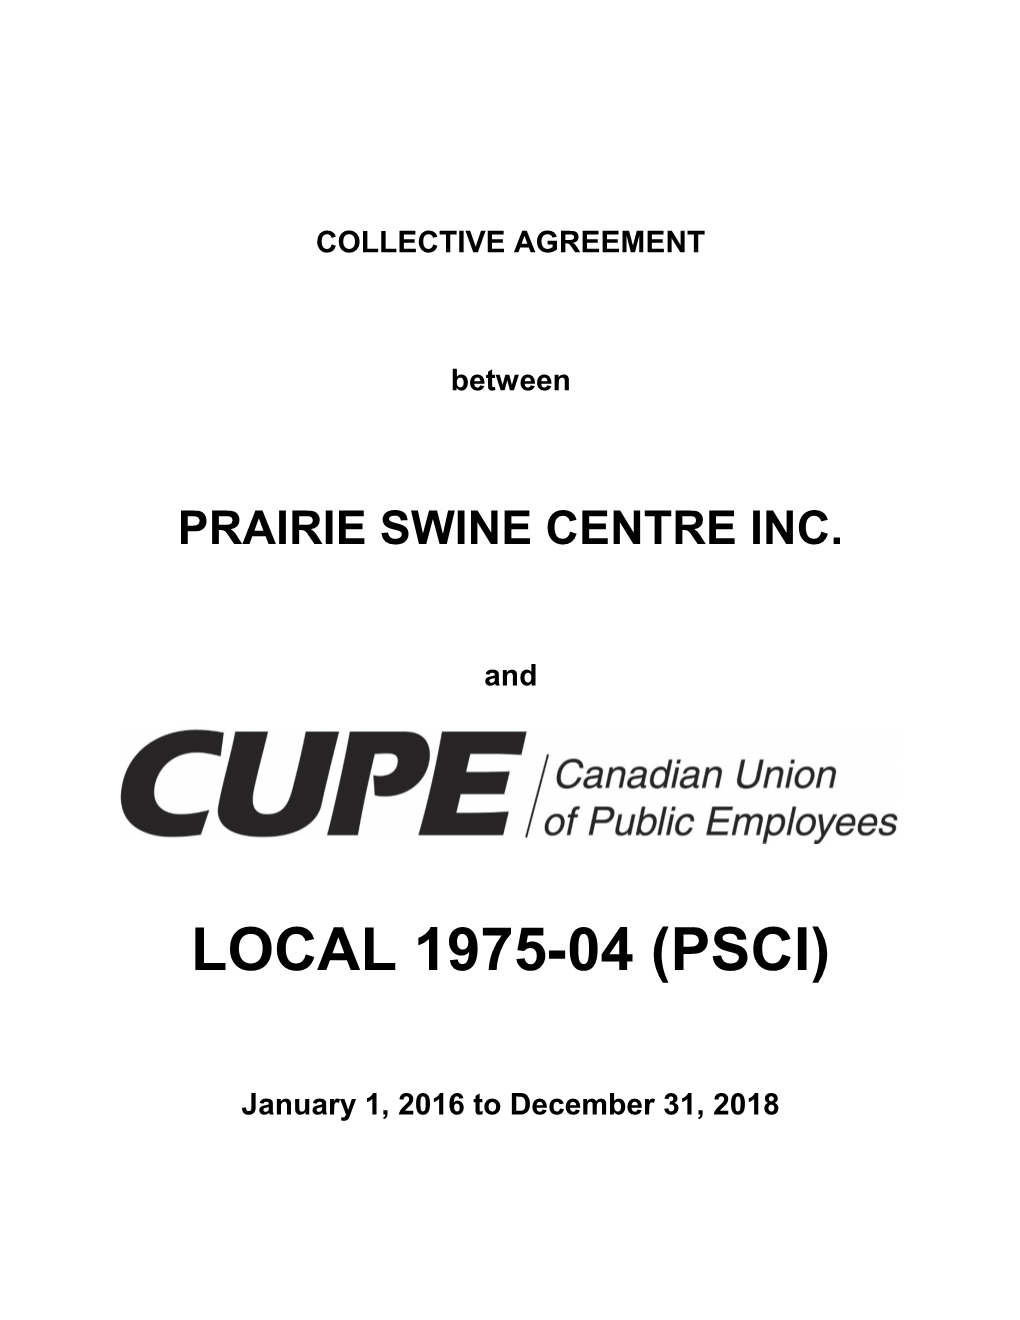 Prairie Swine Centre Inc